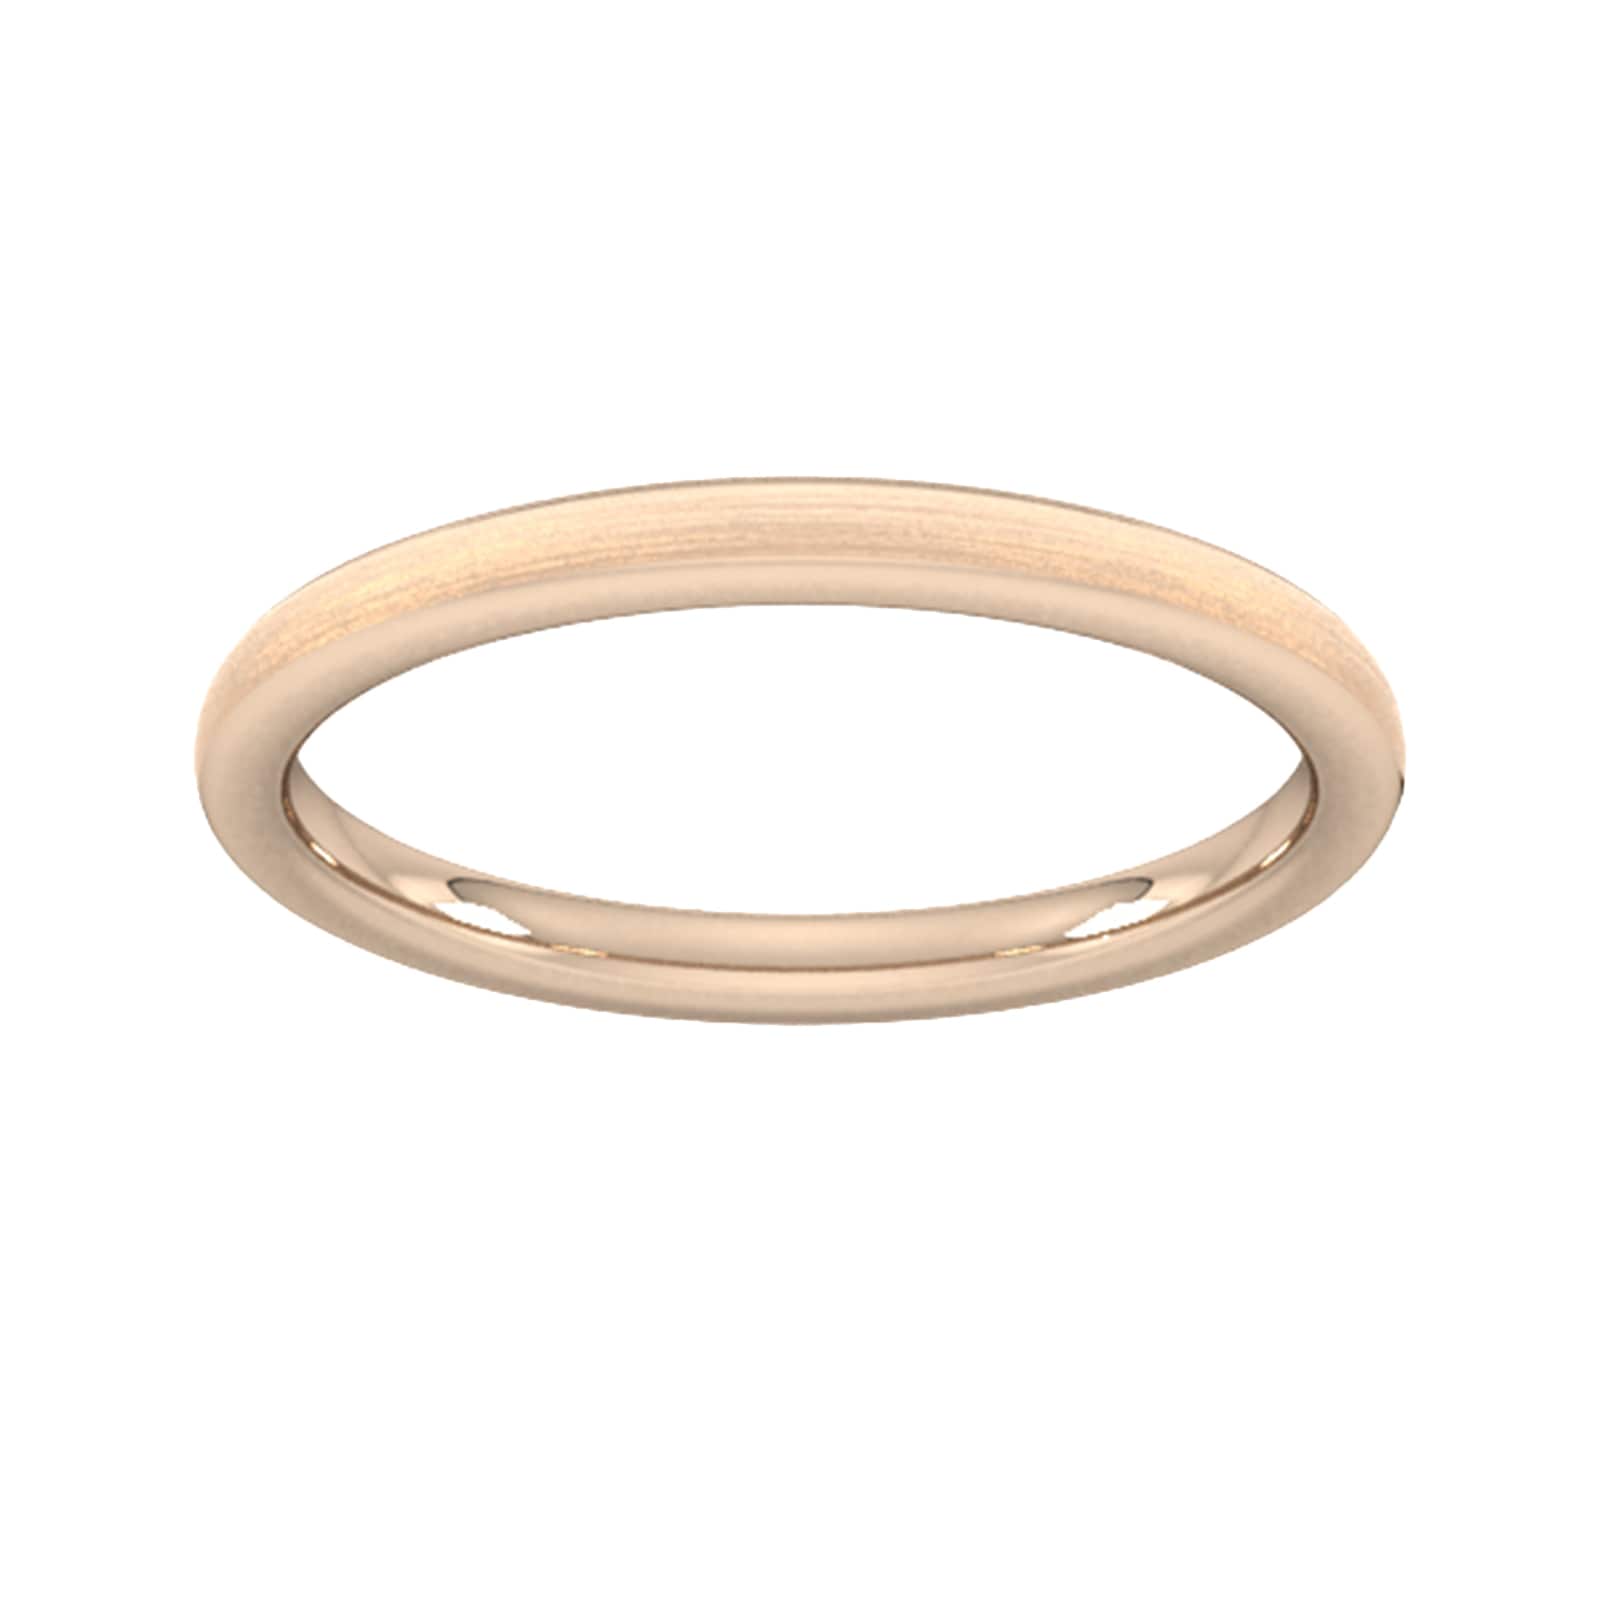 2mm Slight Court Standard Matt Finished Wedding Ring In 18 Carat Rose Gold - Ring Size O